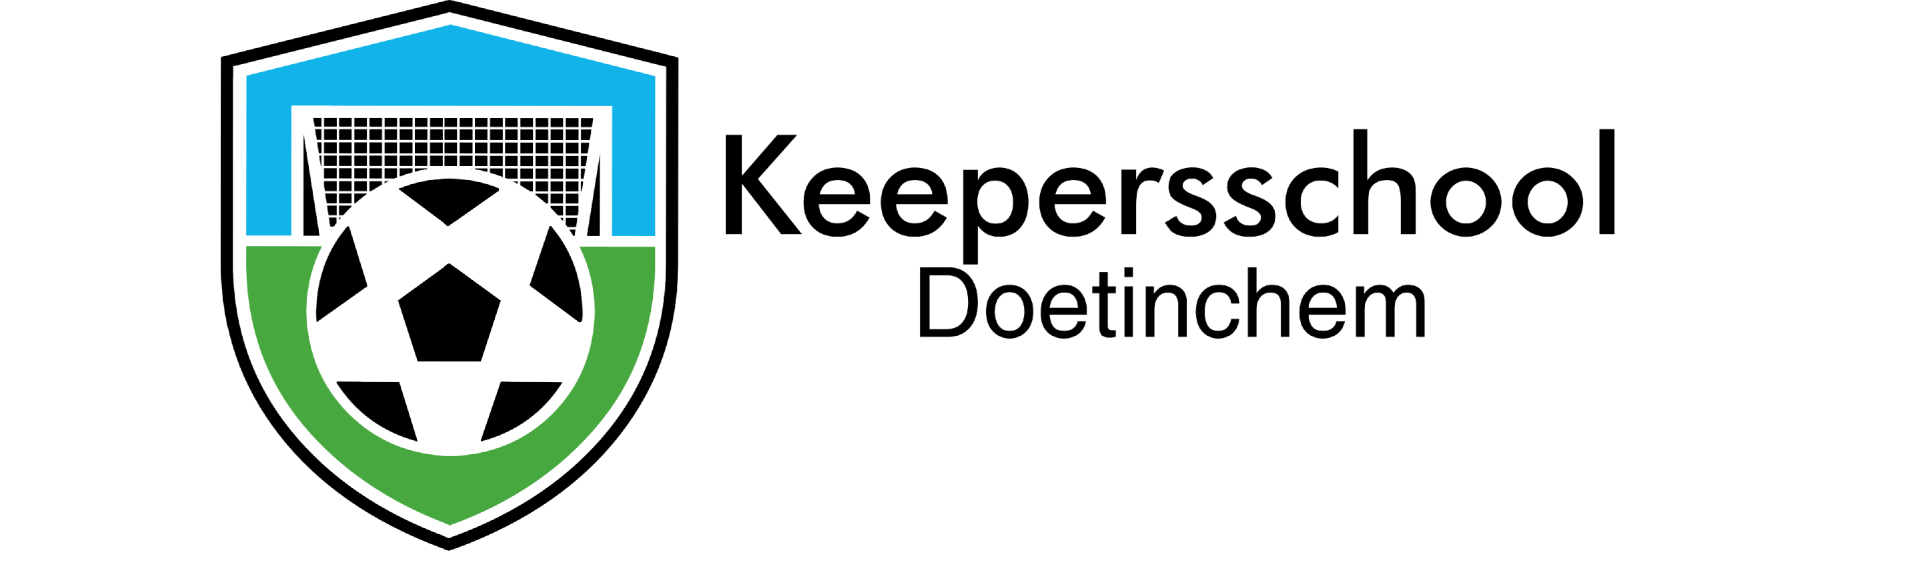 Keepersschool Doetinchem